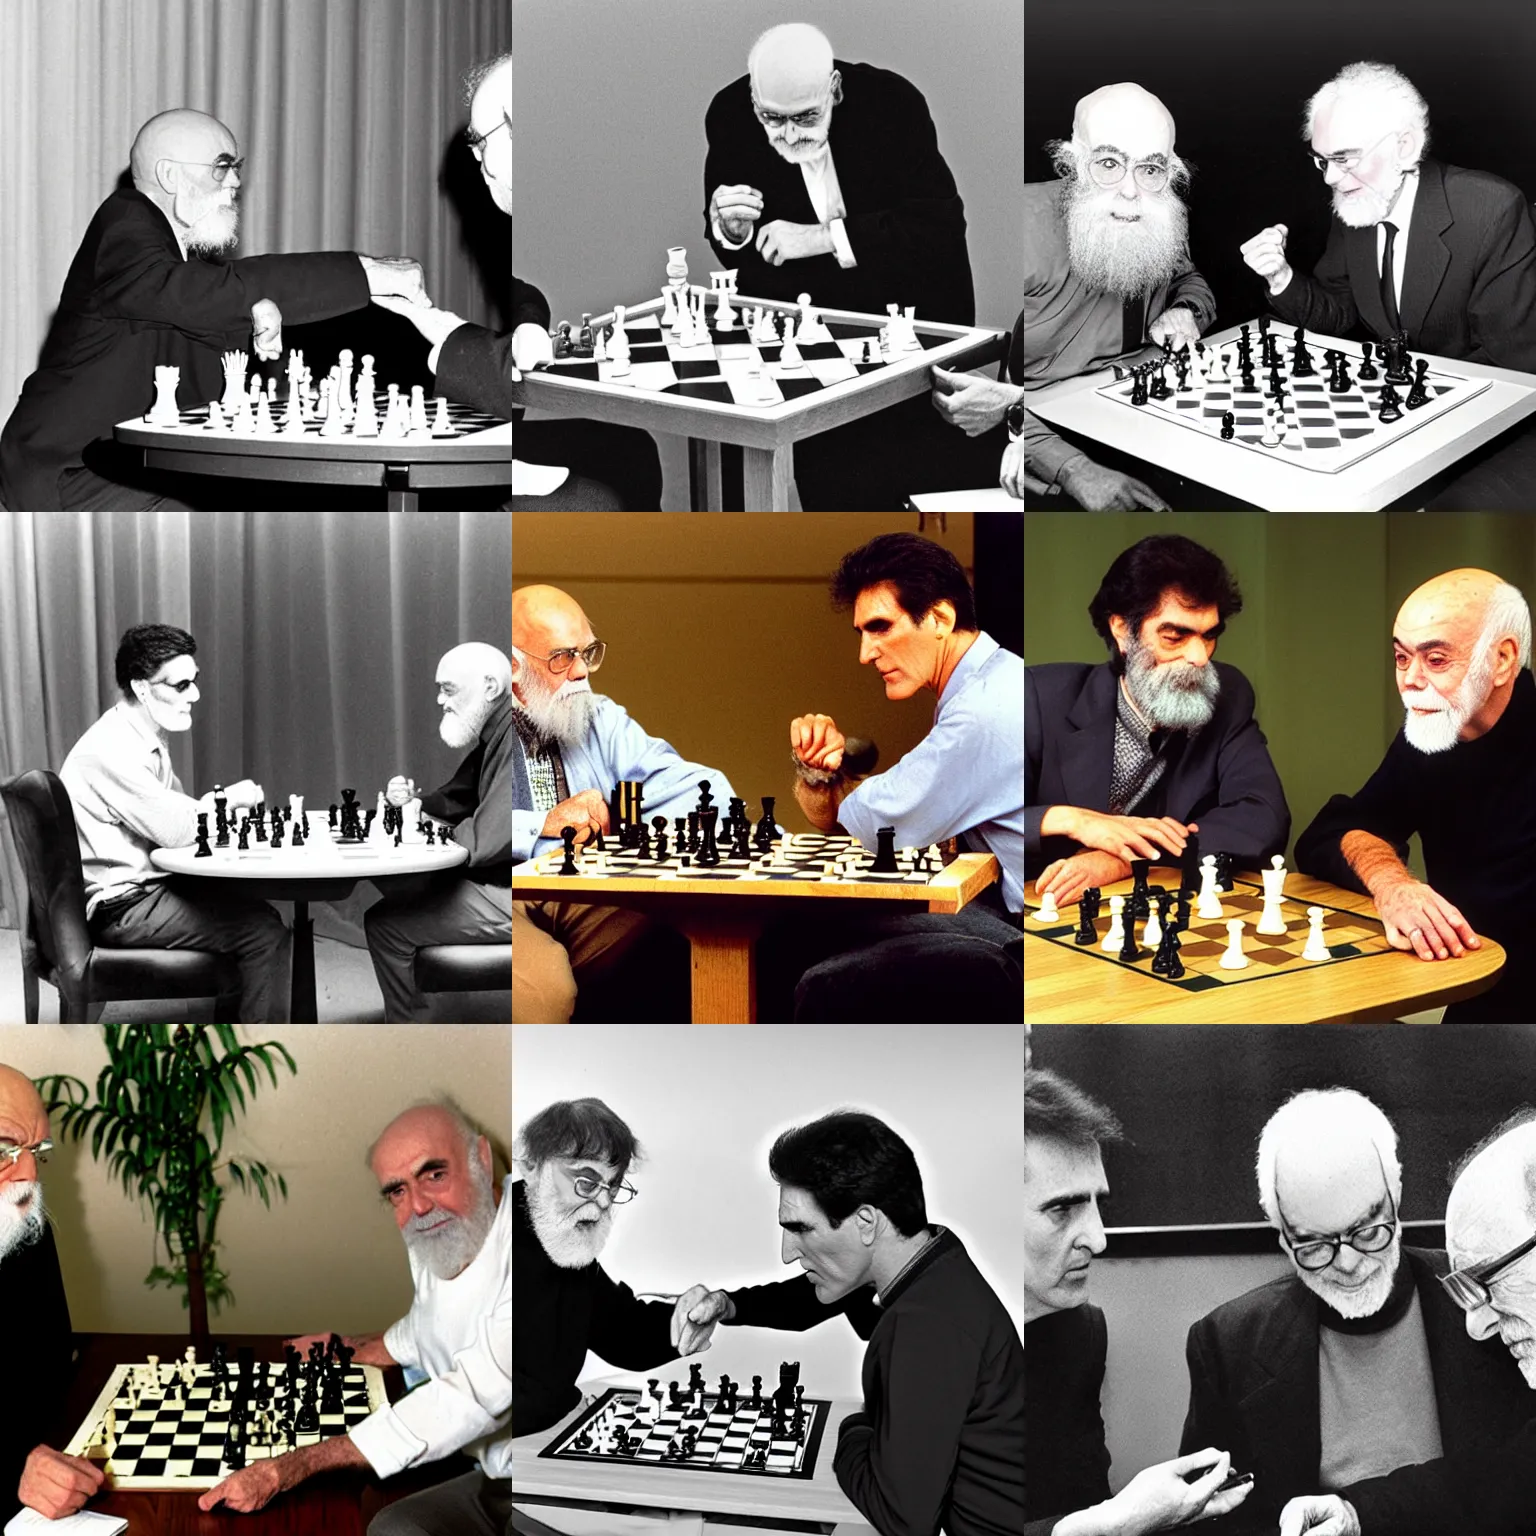 Prompt: James Randi and Uri Geller playing chess